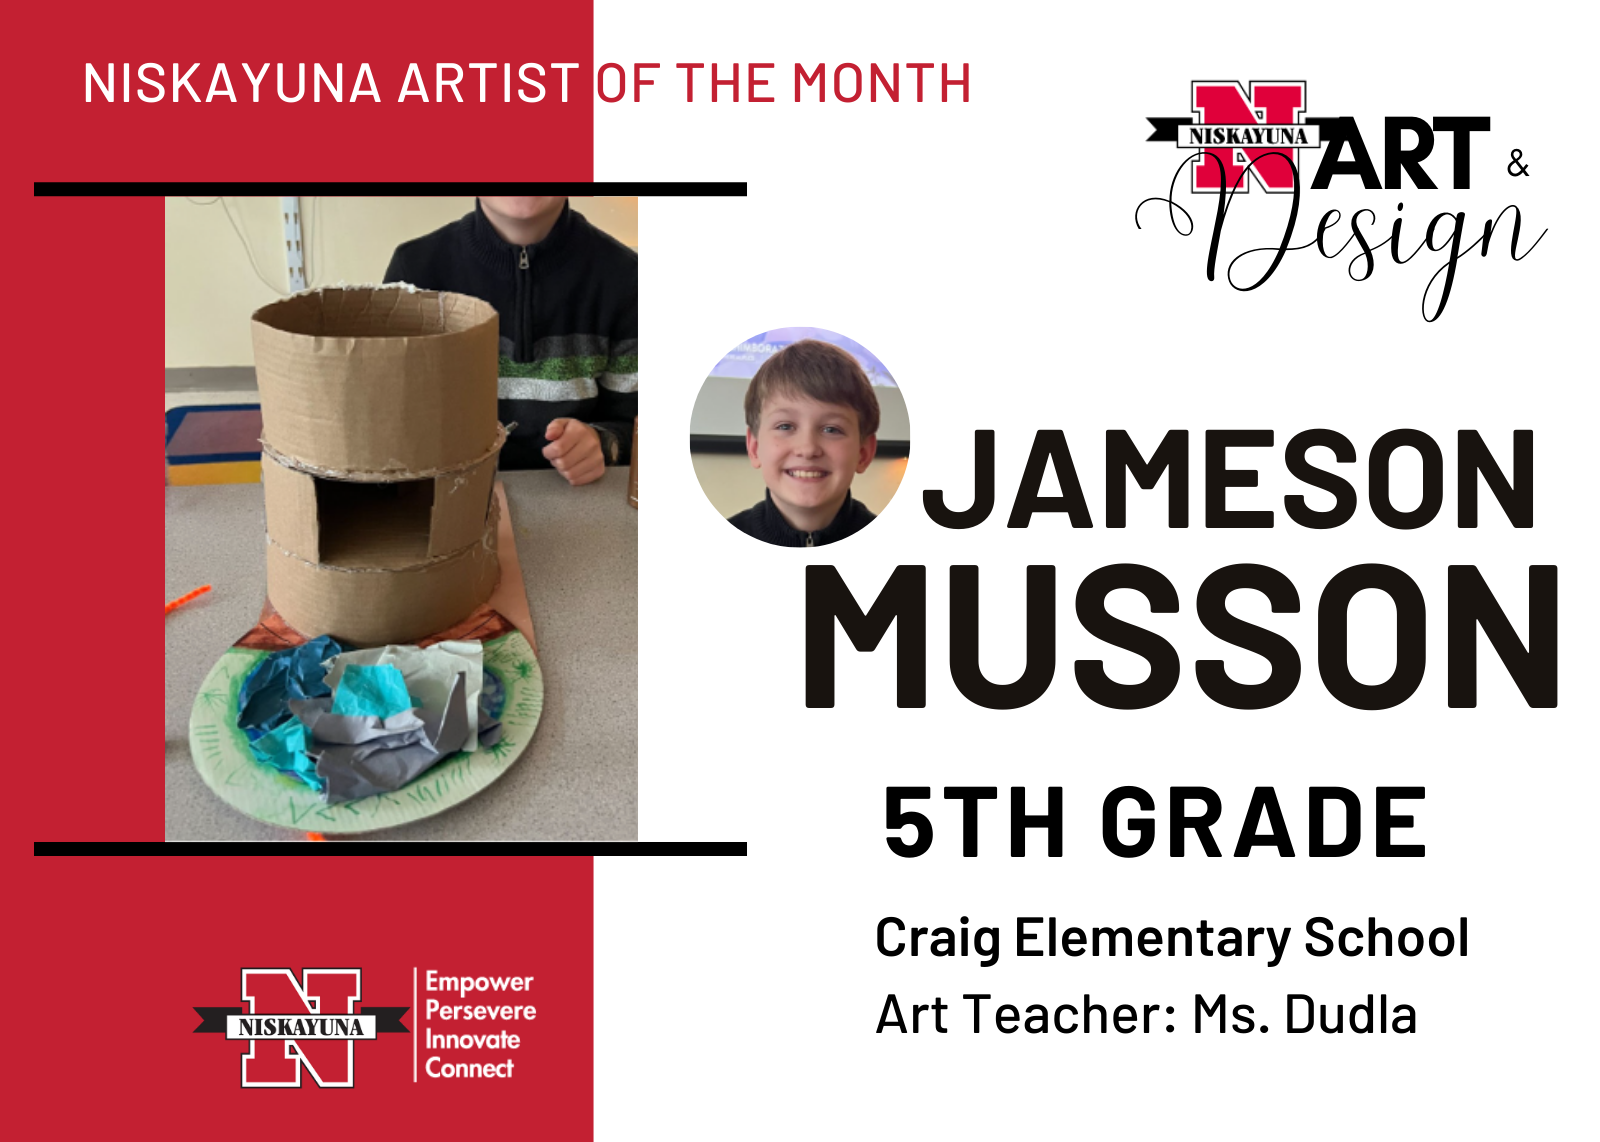 Photo that says Niskayuna Artist of the month Jameson Musson 5th grade Craig Elementary School